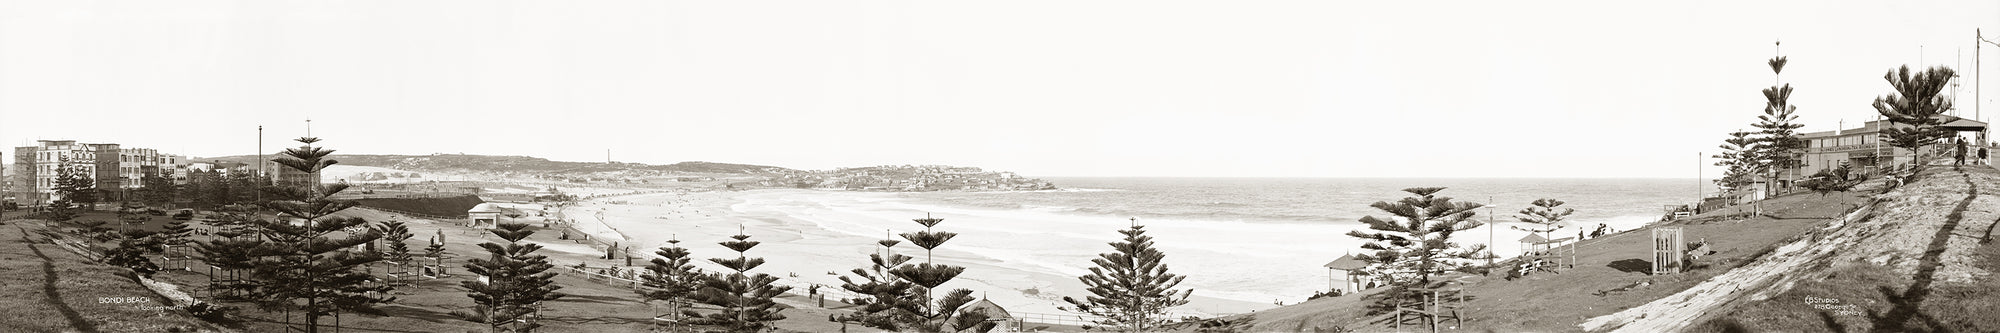 Bondi Beach Looking North, Bondi NSW Australia c.1920